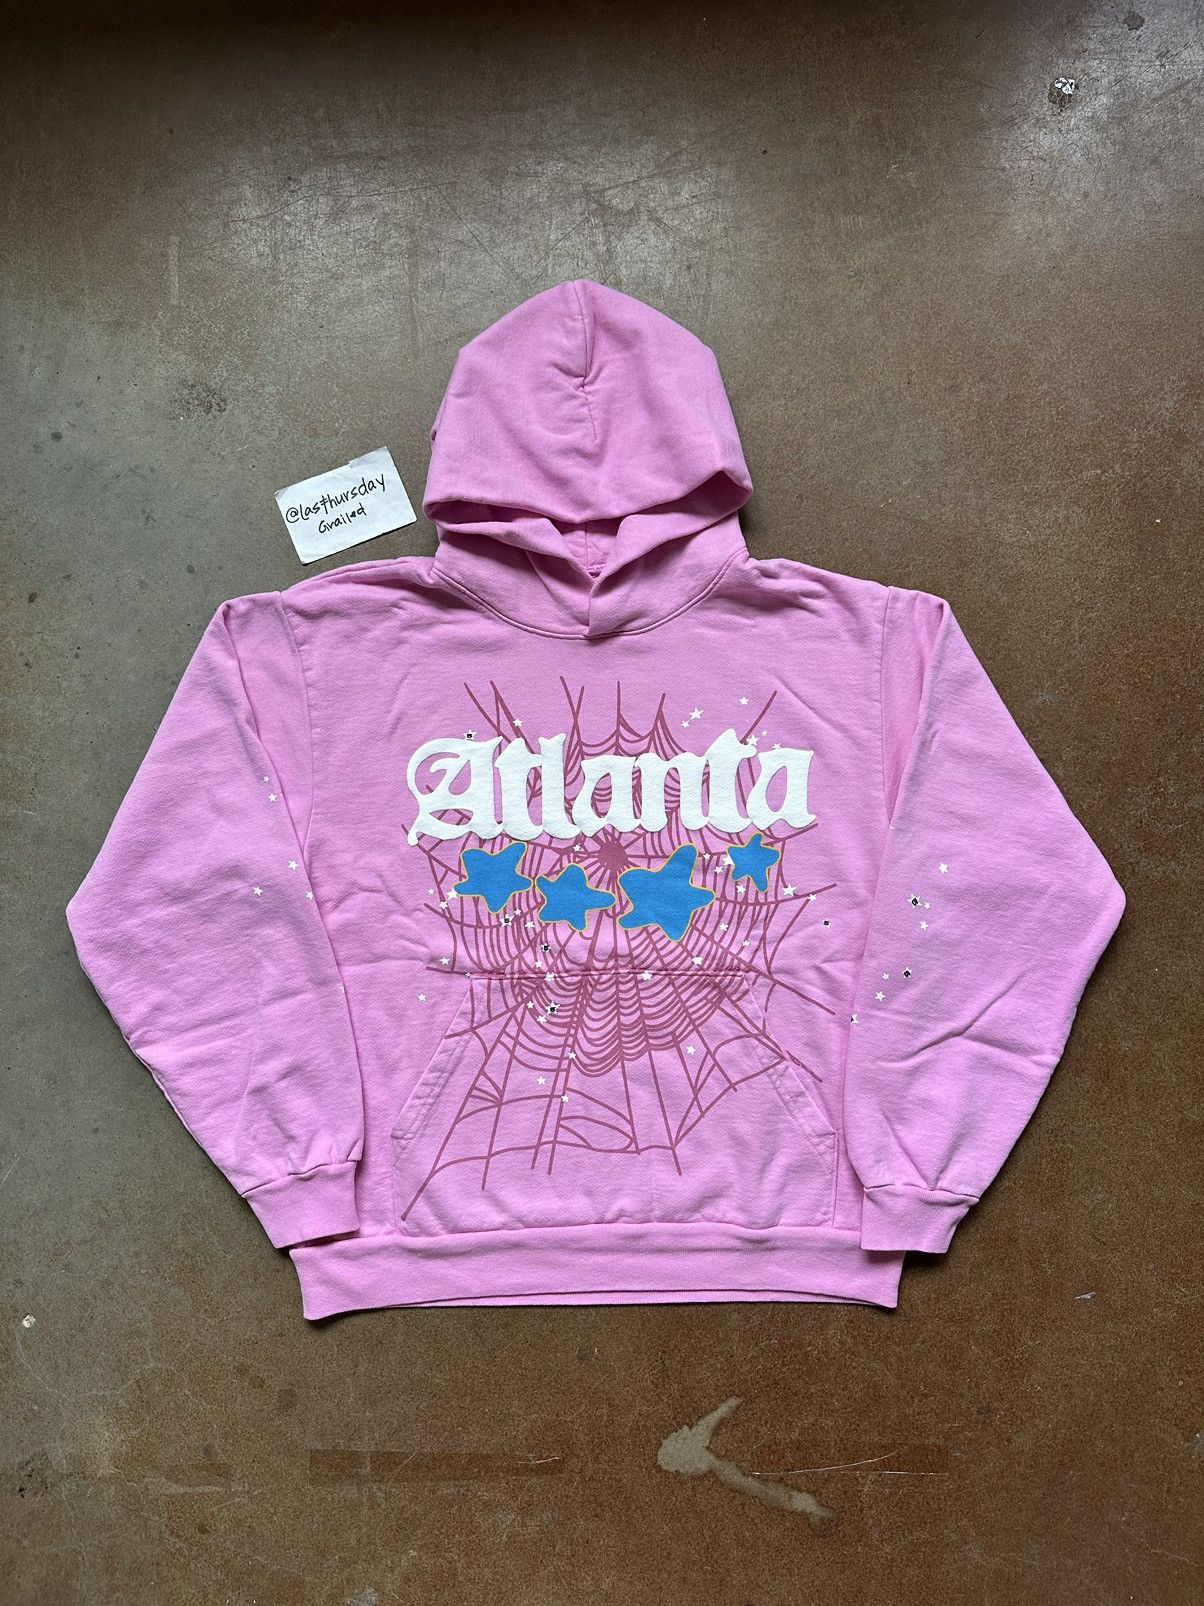 Young Thug Sp5der Worldwide Atlanta Hoodie Pink XL